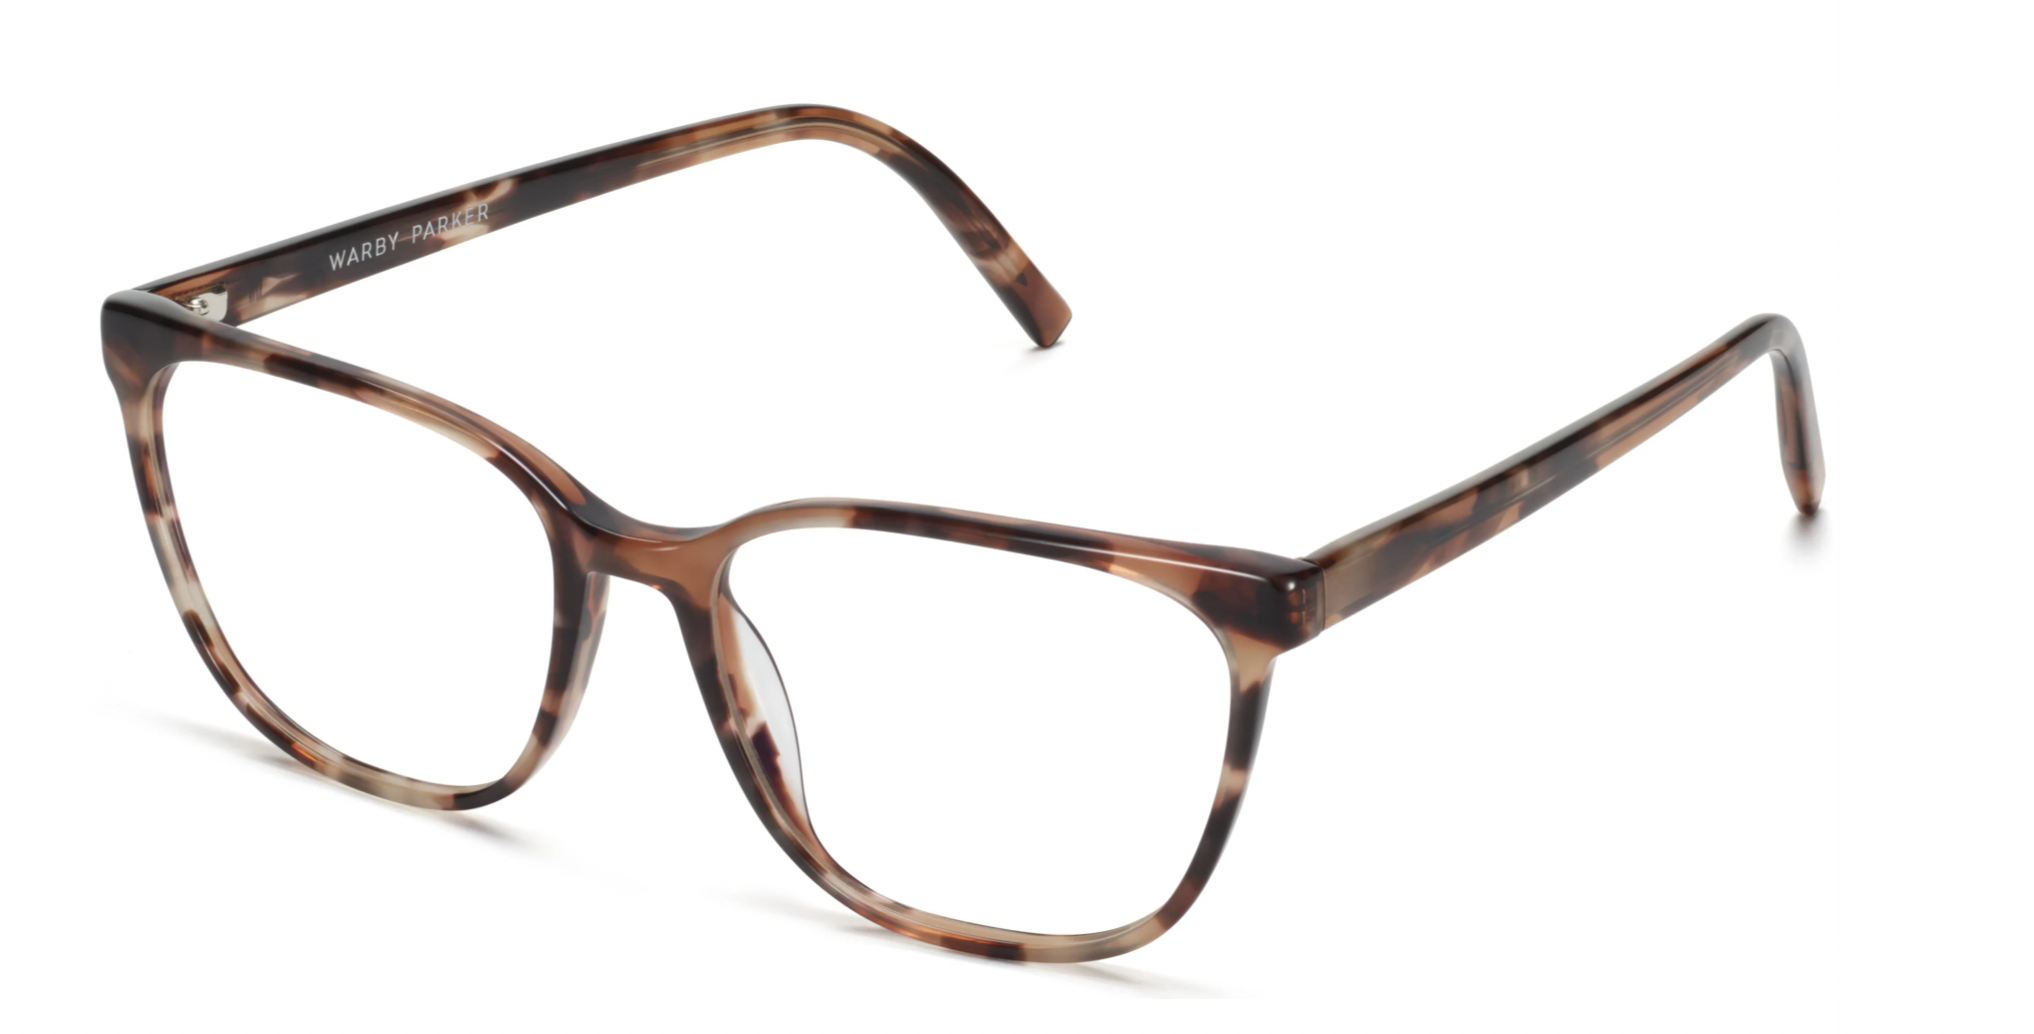 Warby Parker bluelight glasses